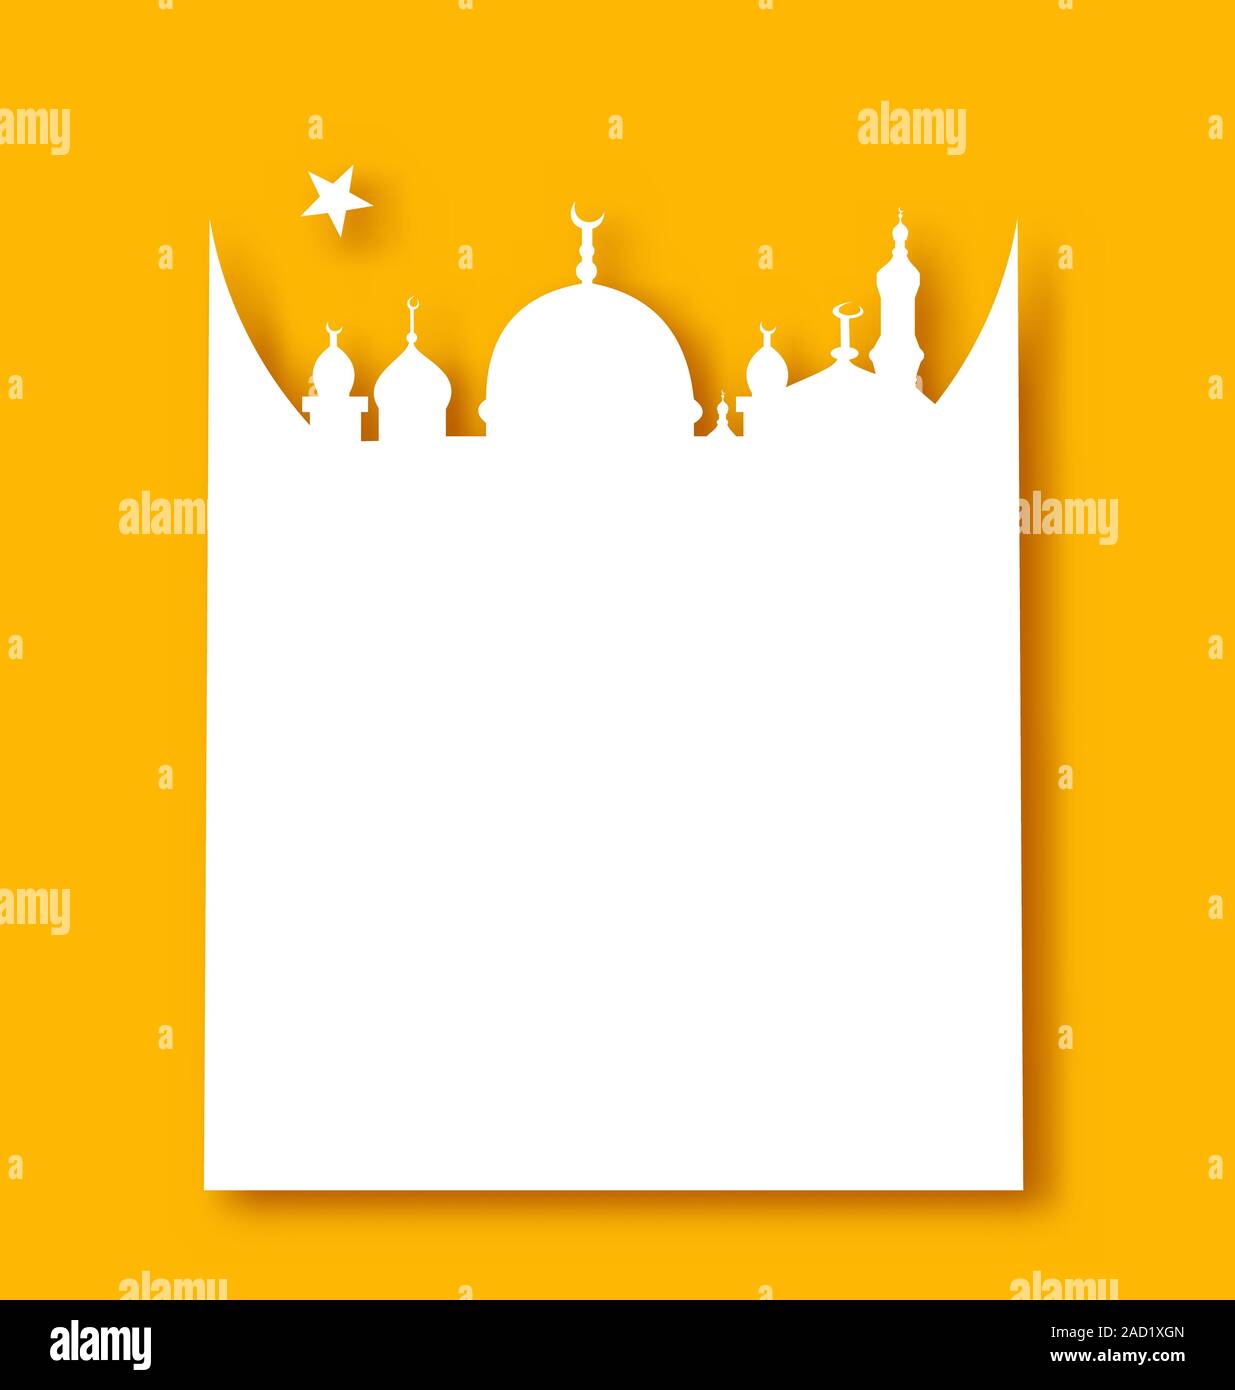 Greeting card template for Ramadan Kareem Stock Photo